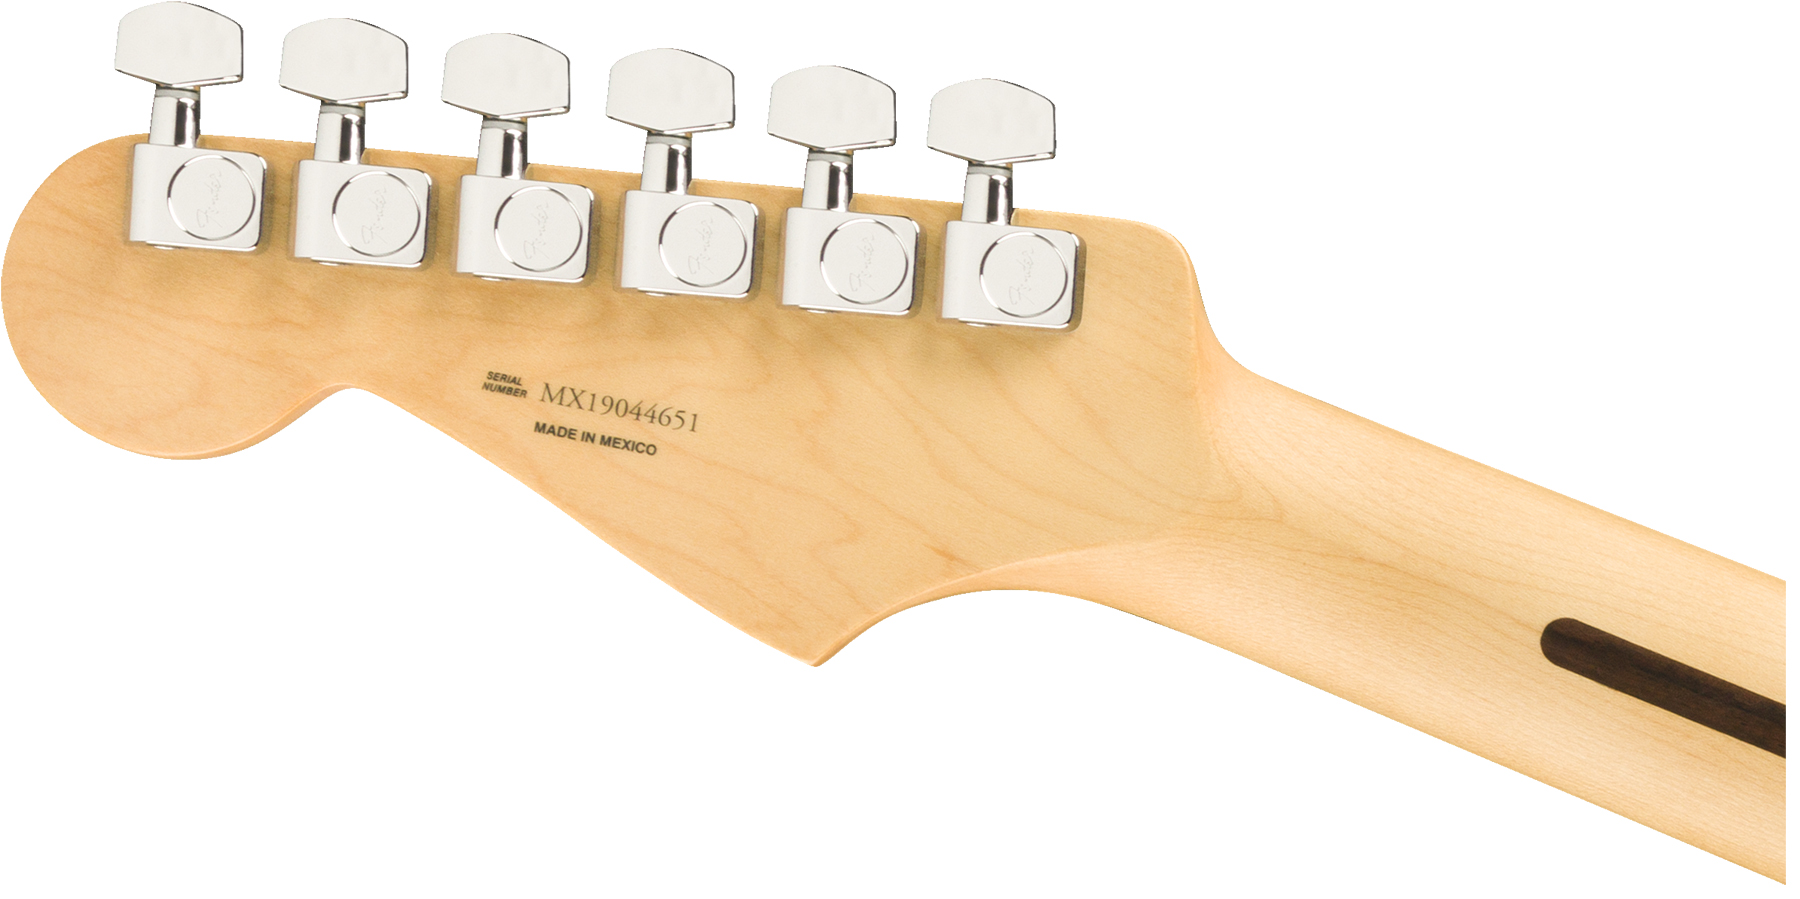 Fender Strat Player Mex 3s Trem Pf - Silver - Guitare Électrique Forme Str - Variation 3